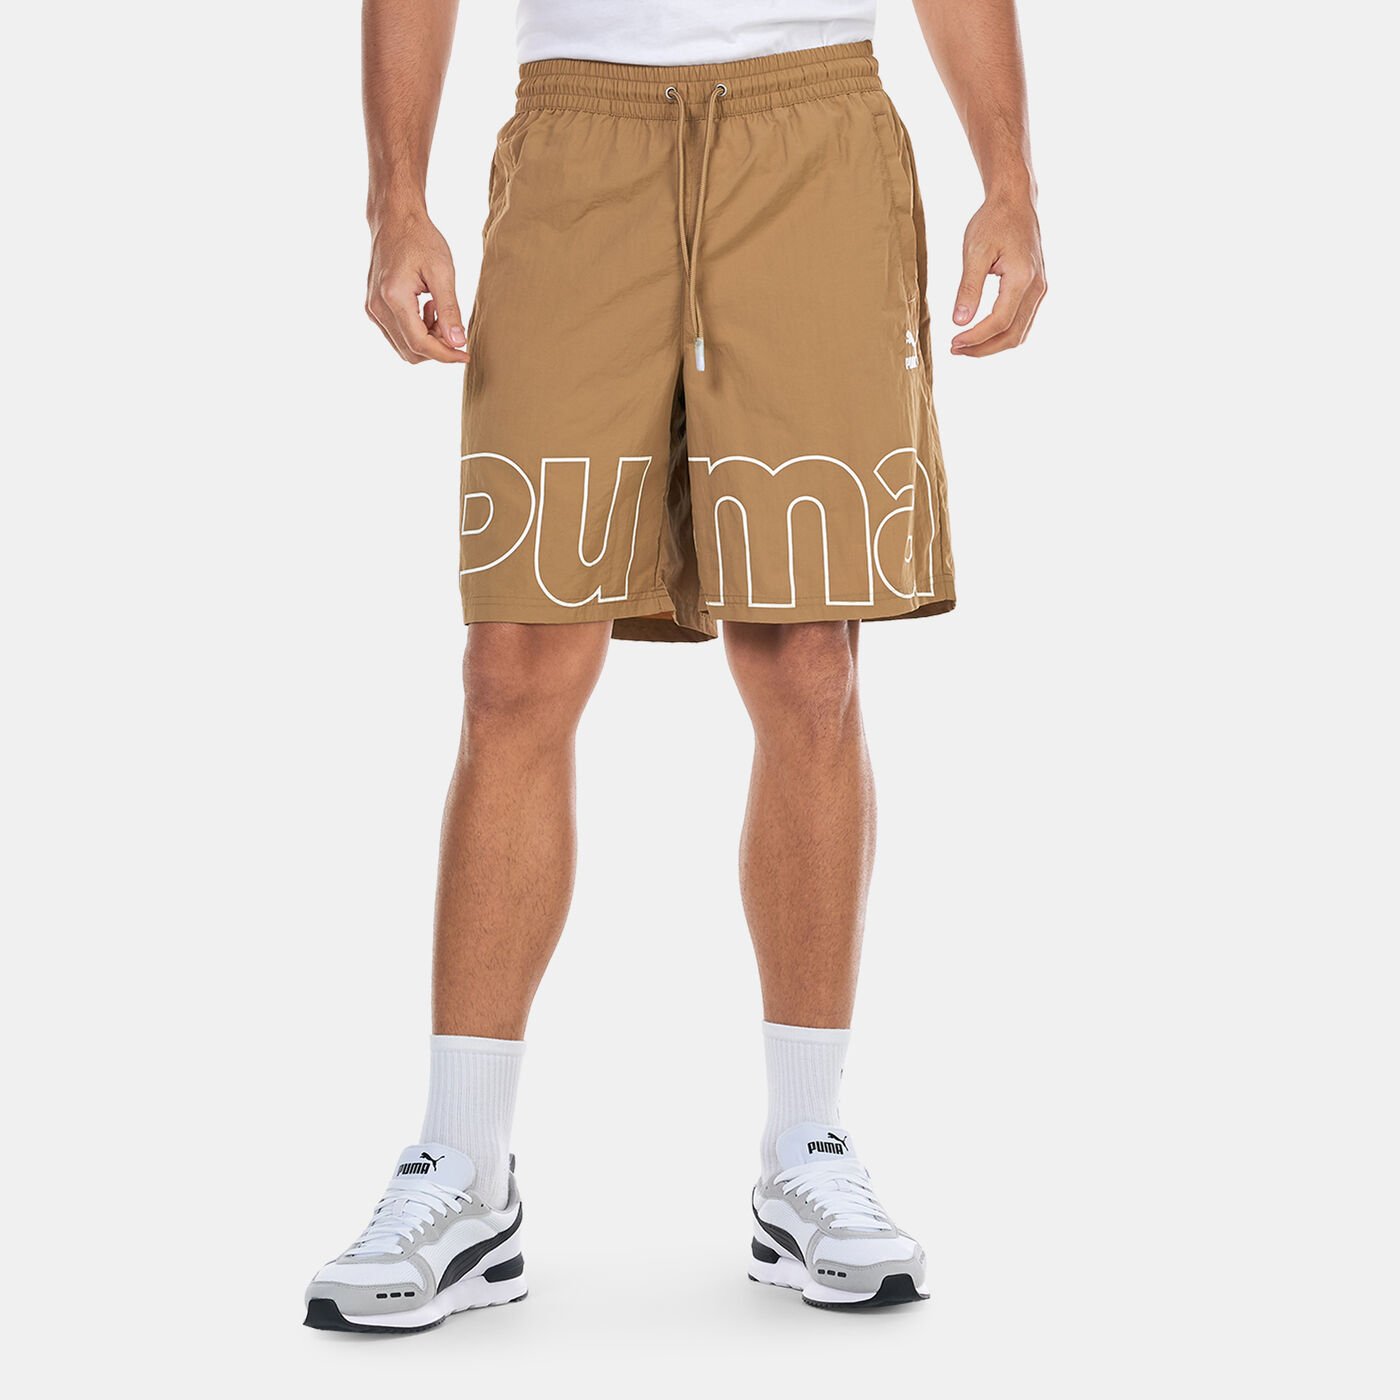 Men's TEAM Woven Shorts